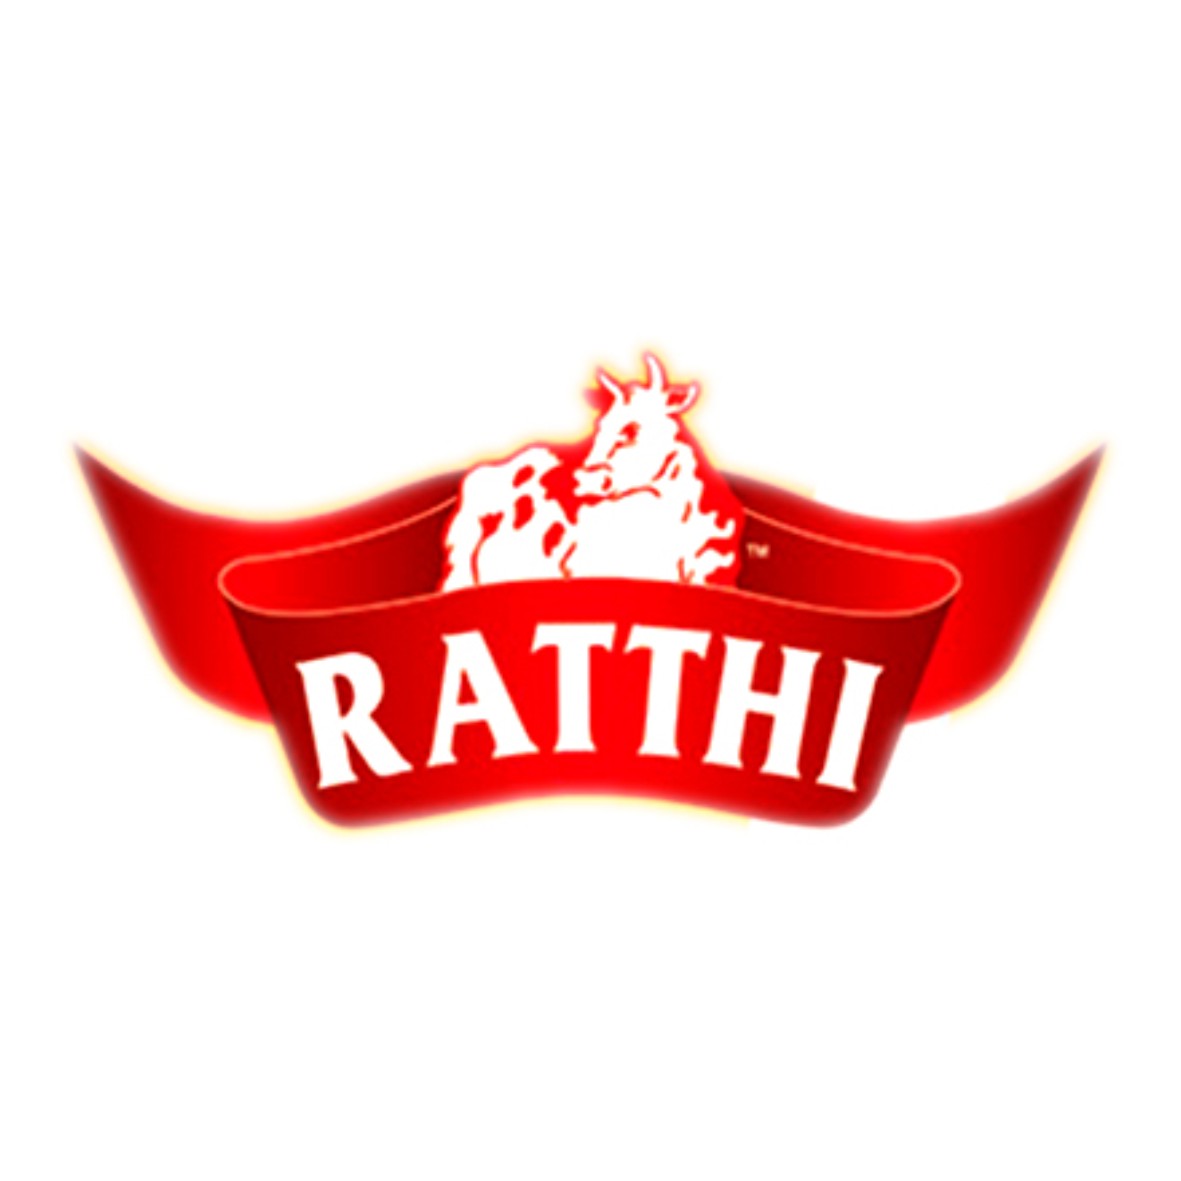 ratthi